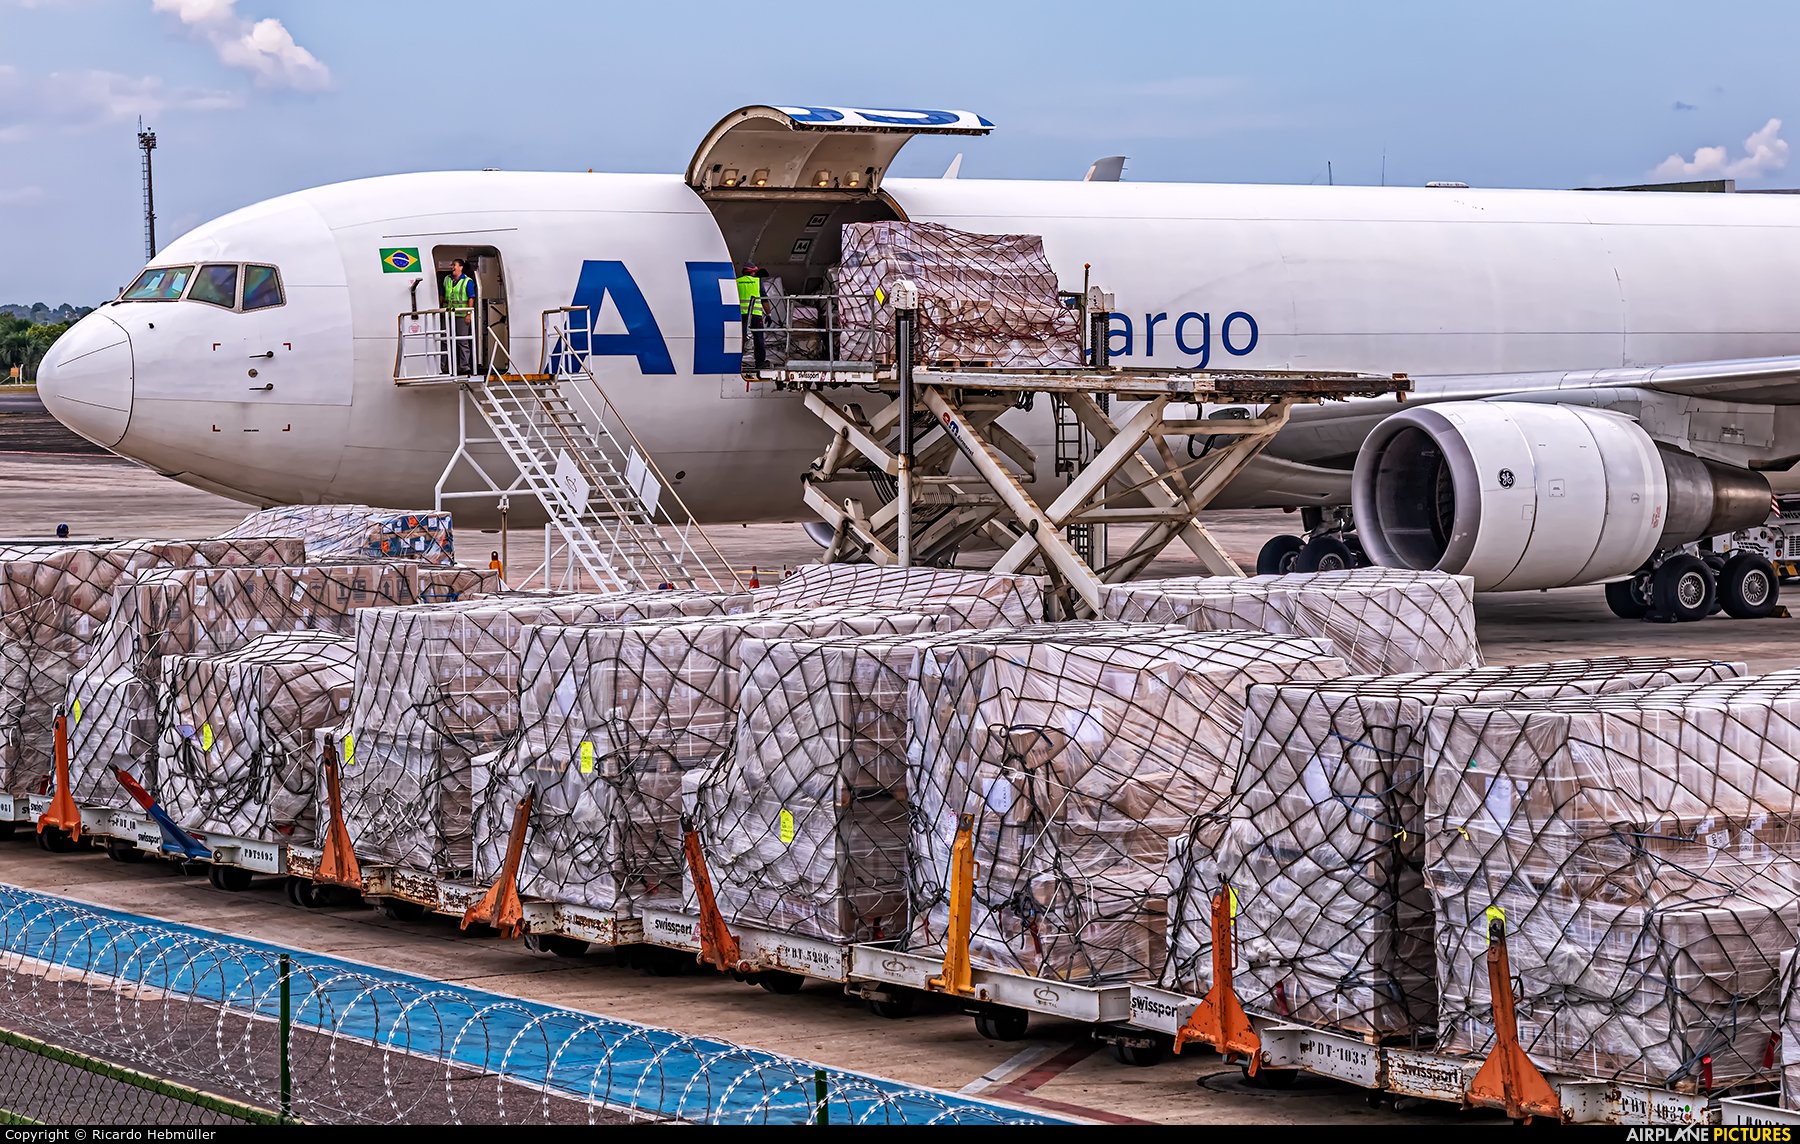 ABSA Cargo PR-ABB aircraft at Manaus - Eduardo Gomes